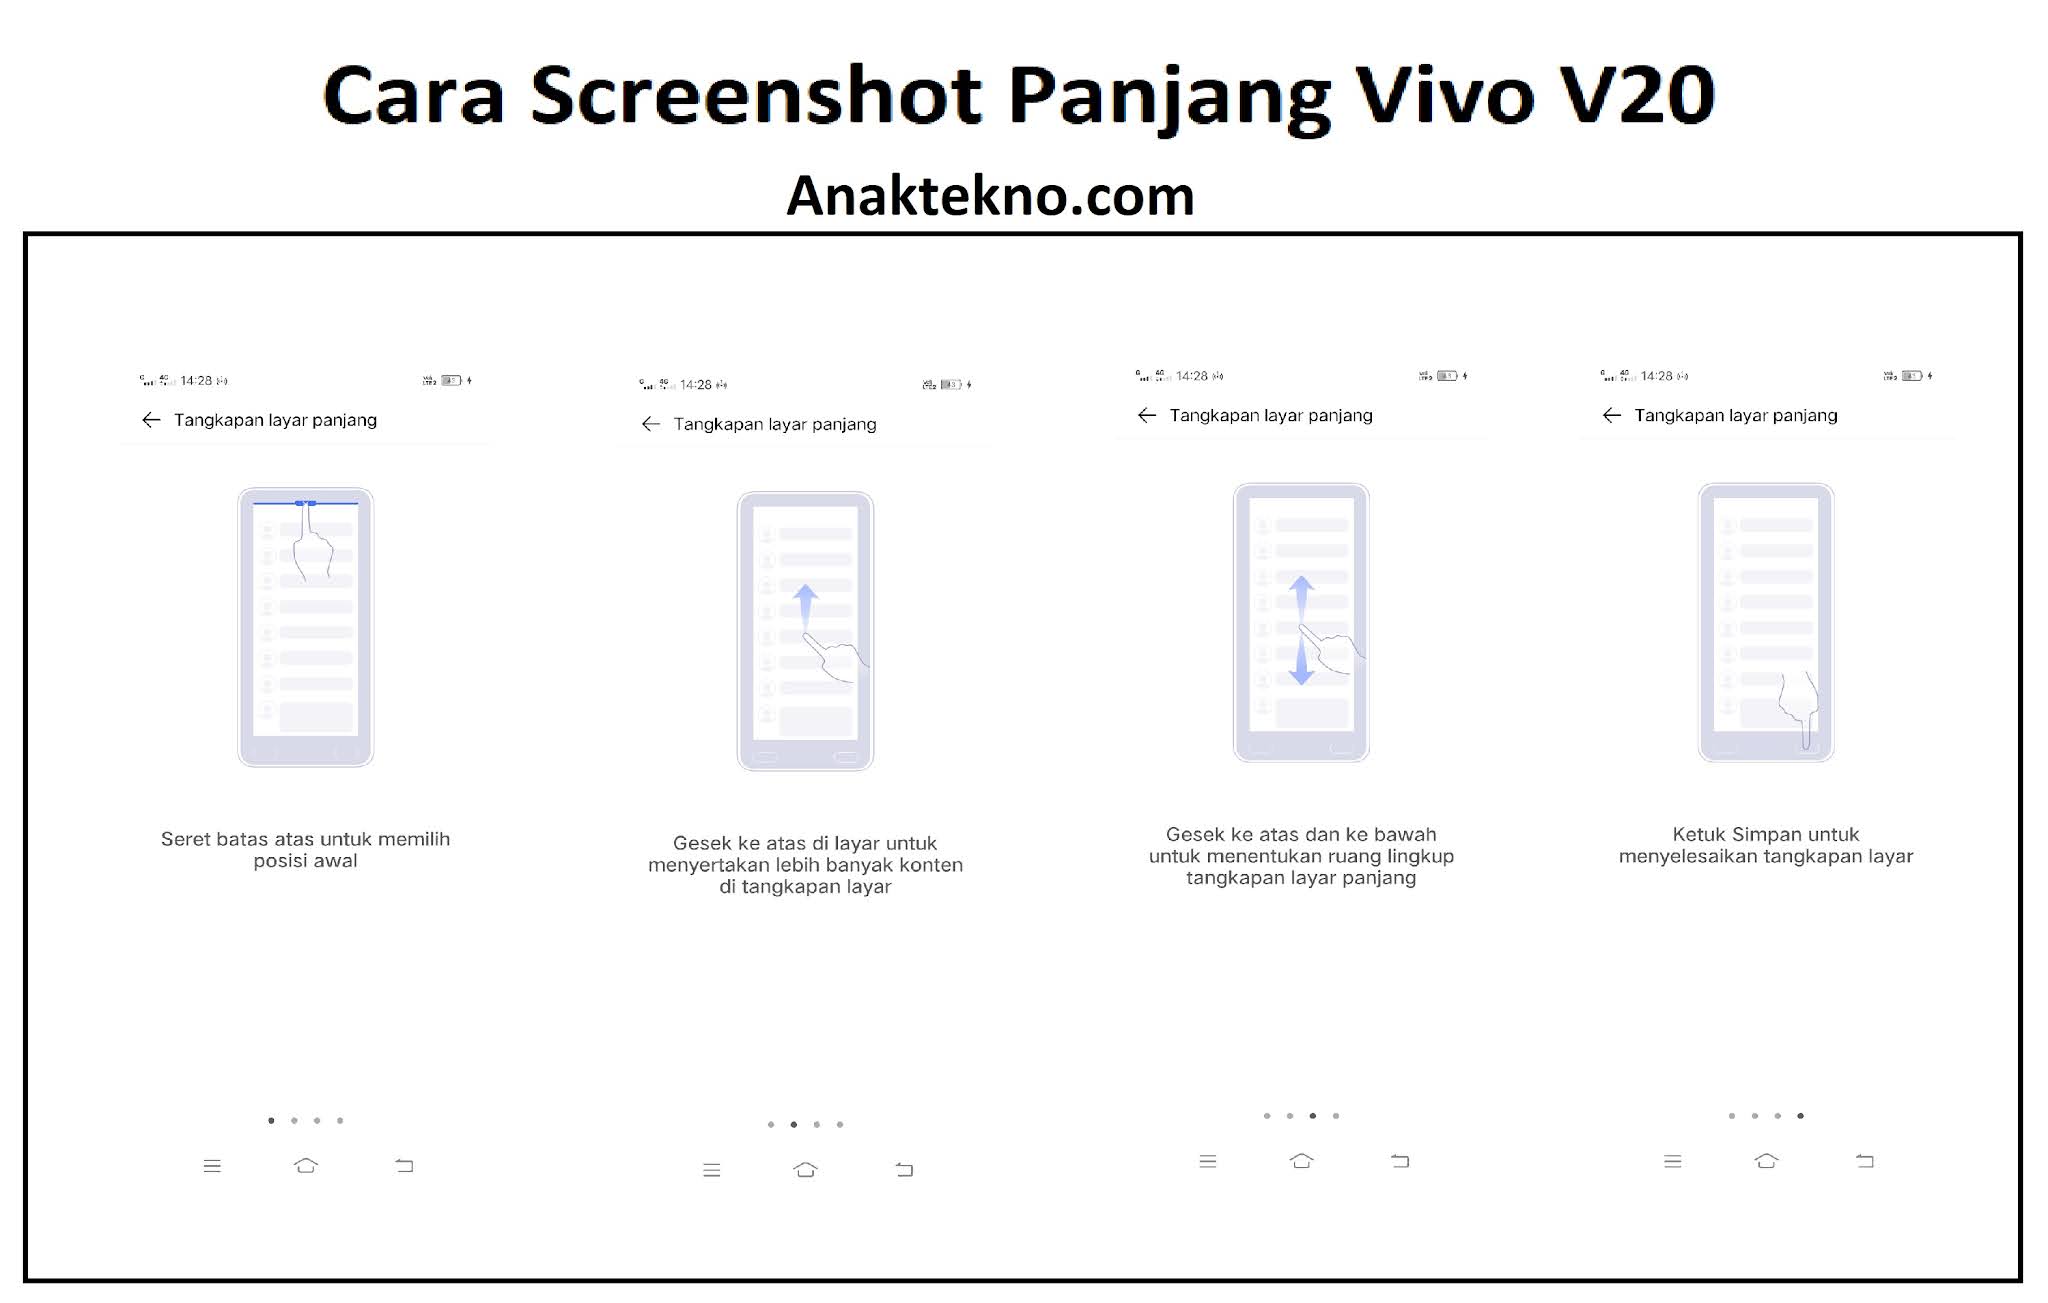 Cara screenshot Vivo V20 panjang